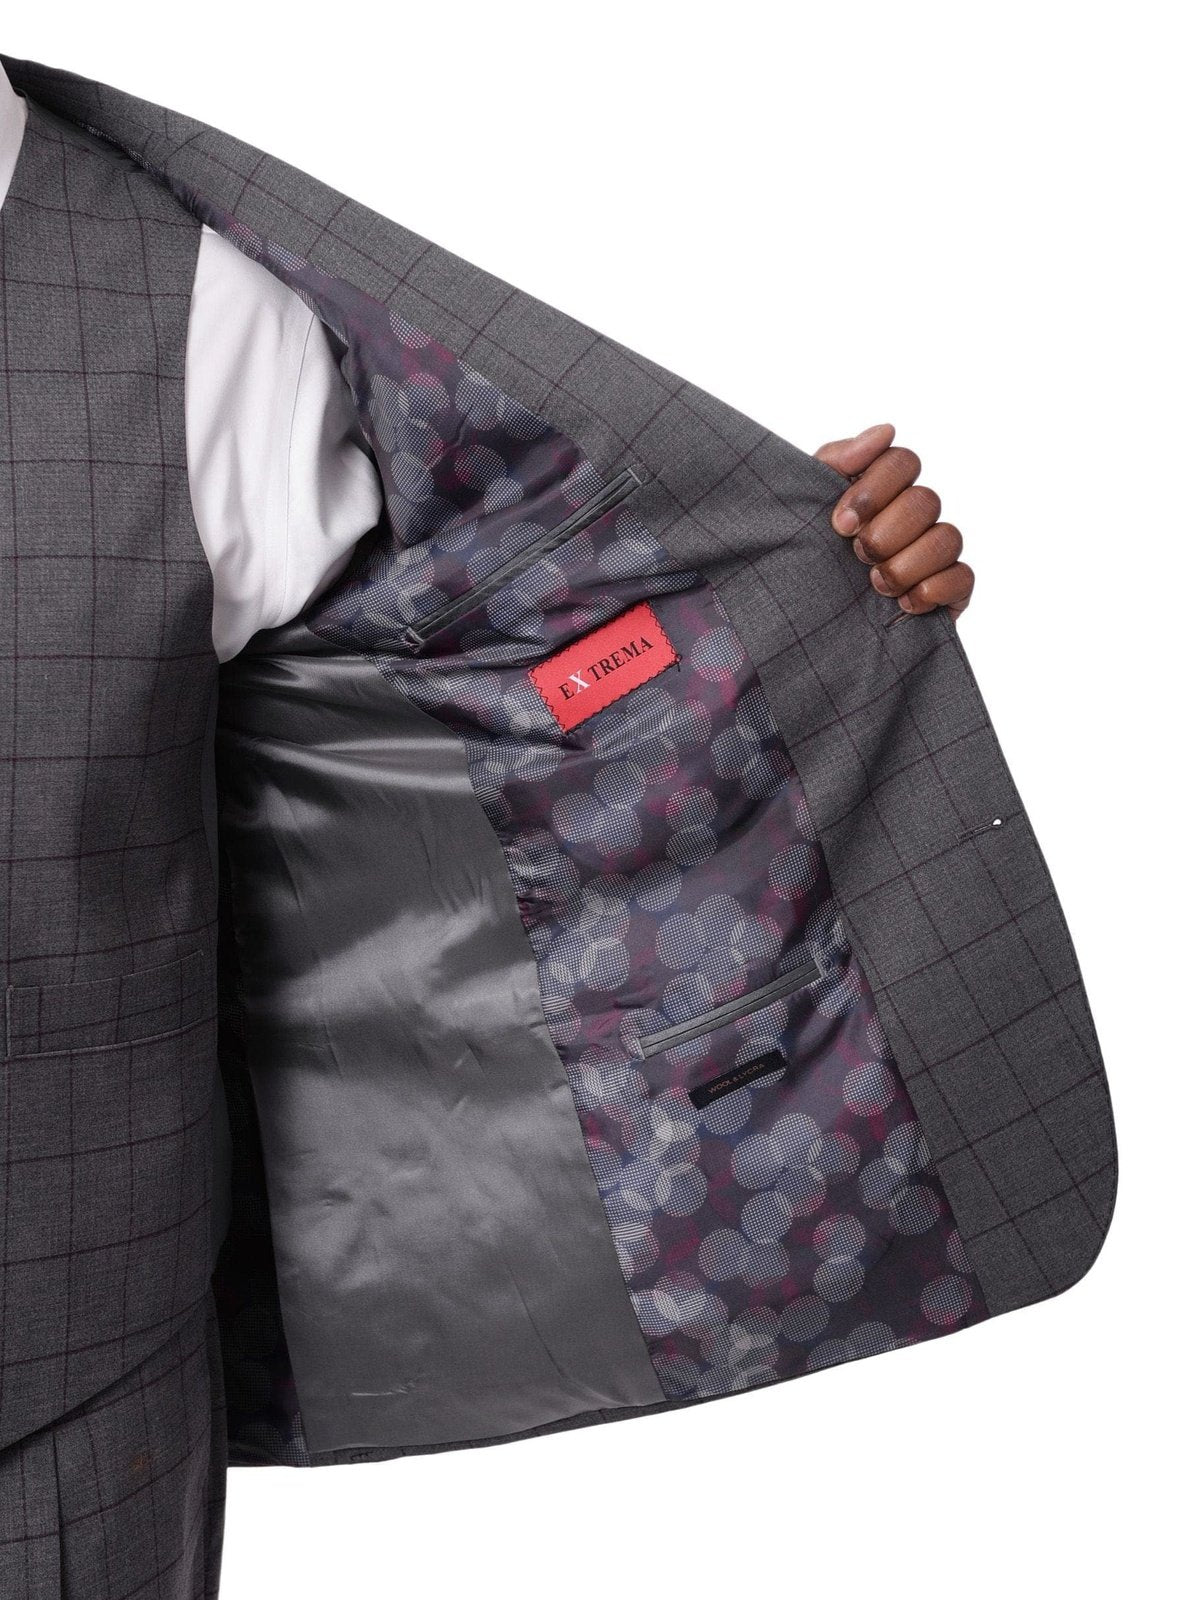 Italiano Italiano Mens Gray Windowpane 100% Zegna Wool Slim Fit 2 Piece Suit